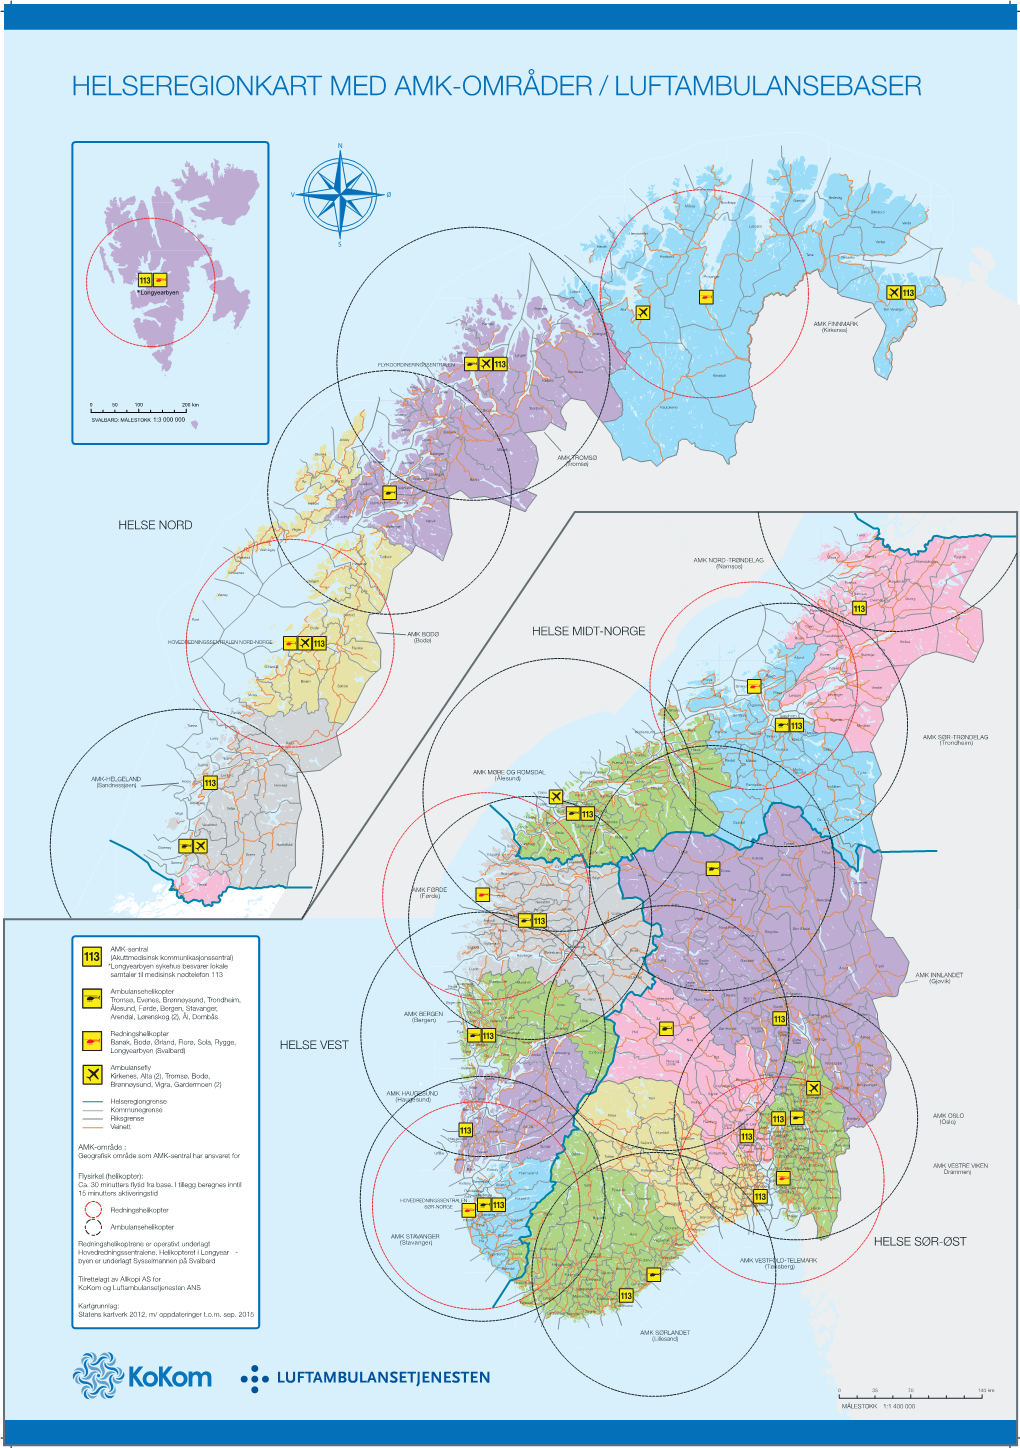 Helseregionkart Med Amk-Områder / Luftambulansebaser